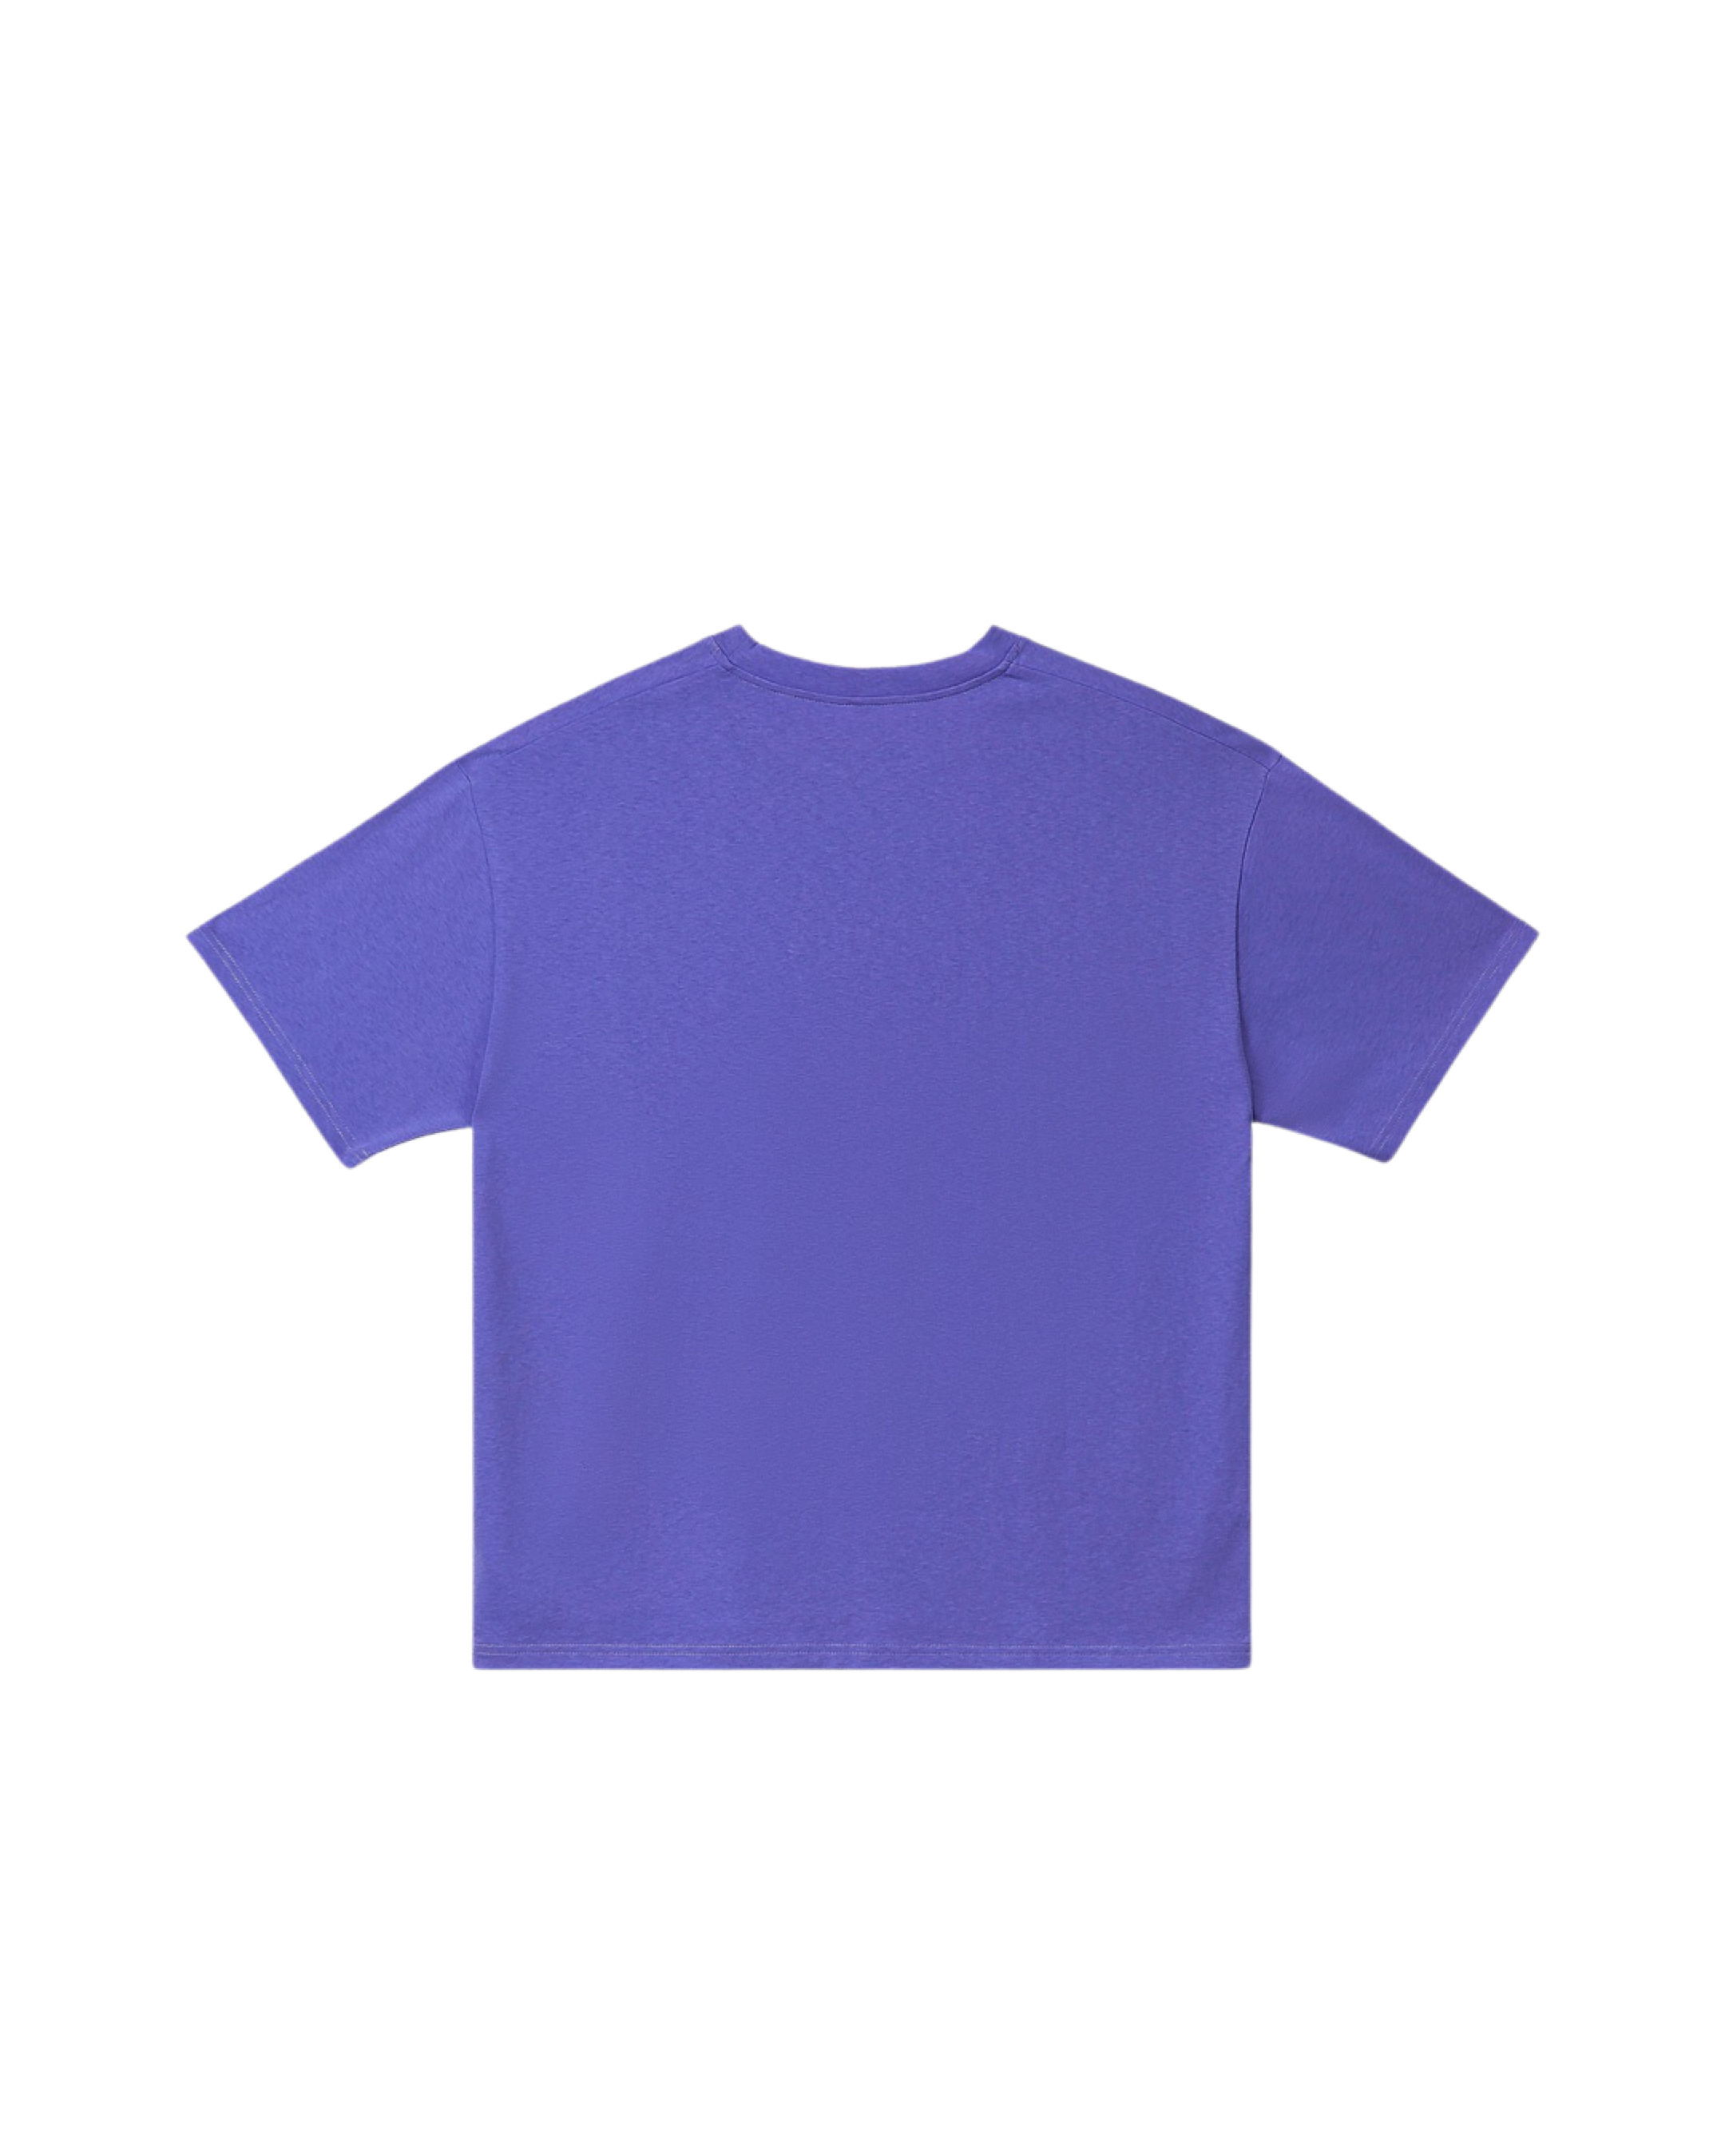 Summer Classic T-shirt in Iris Purple